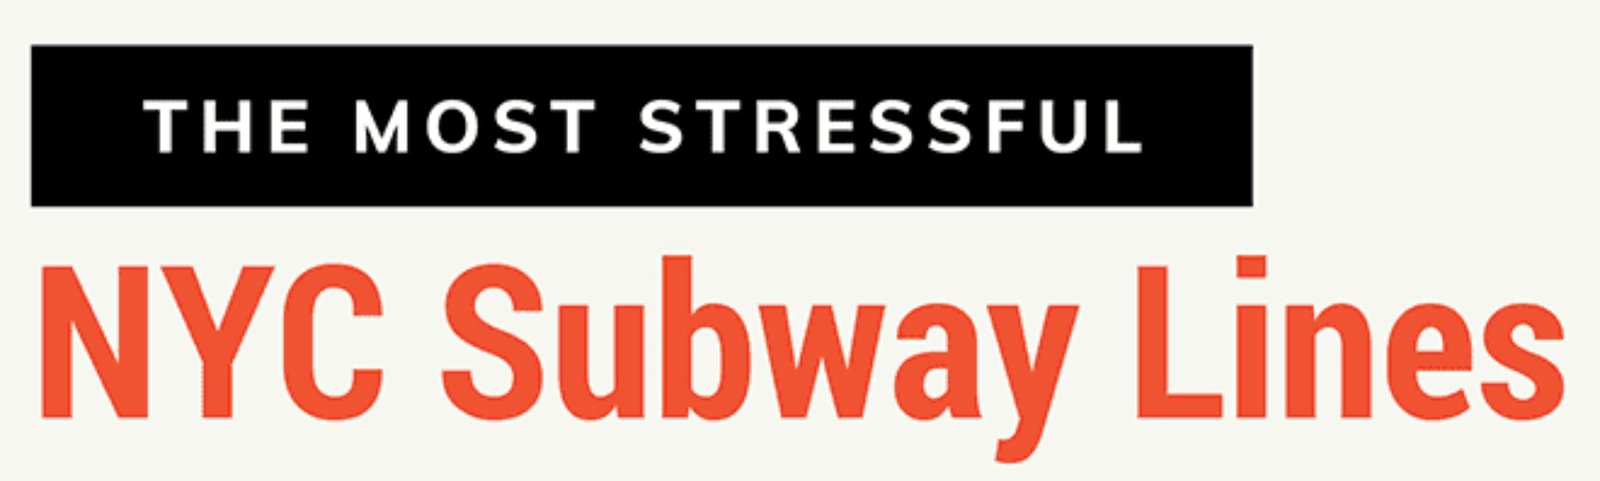 Subway Stress